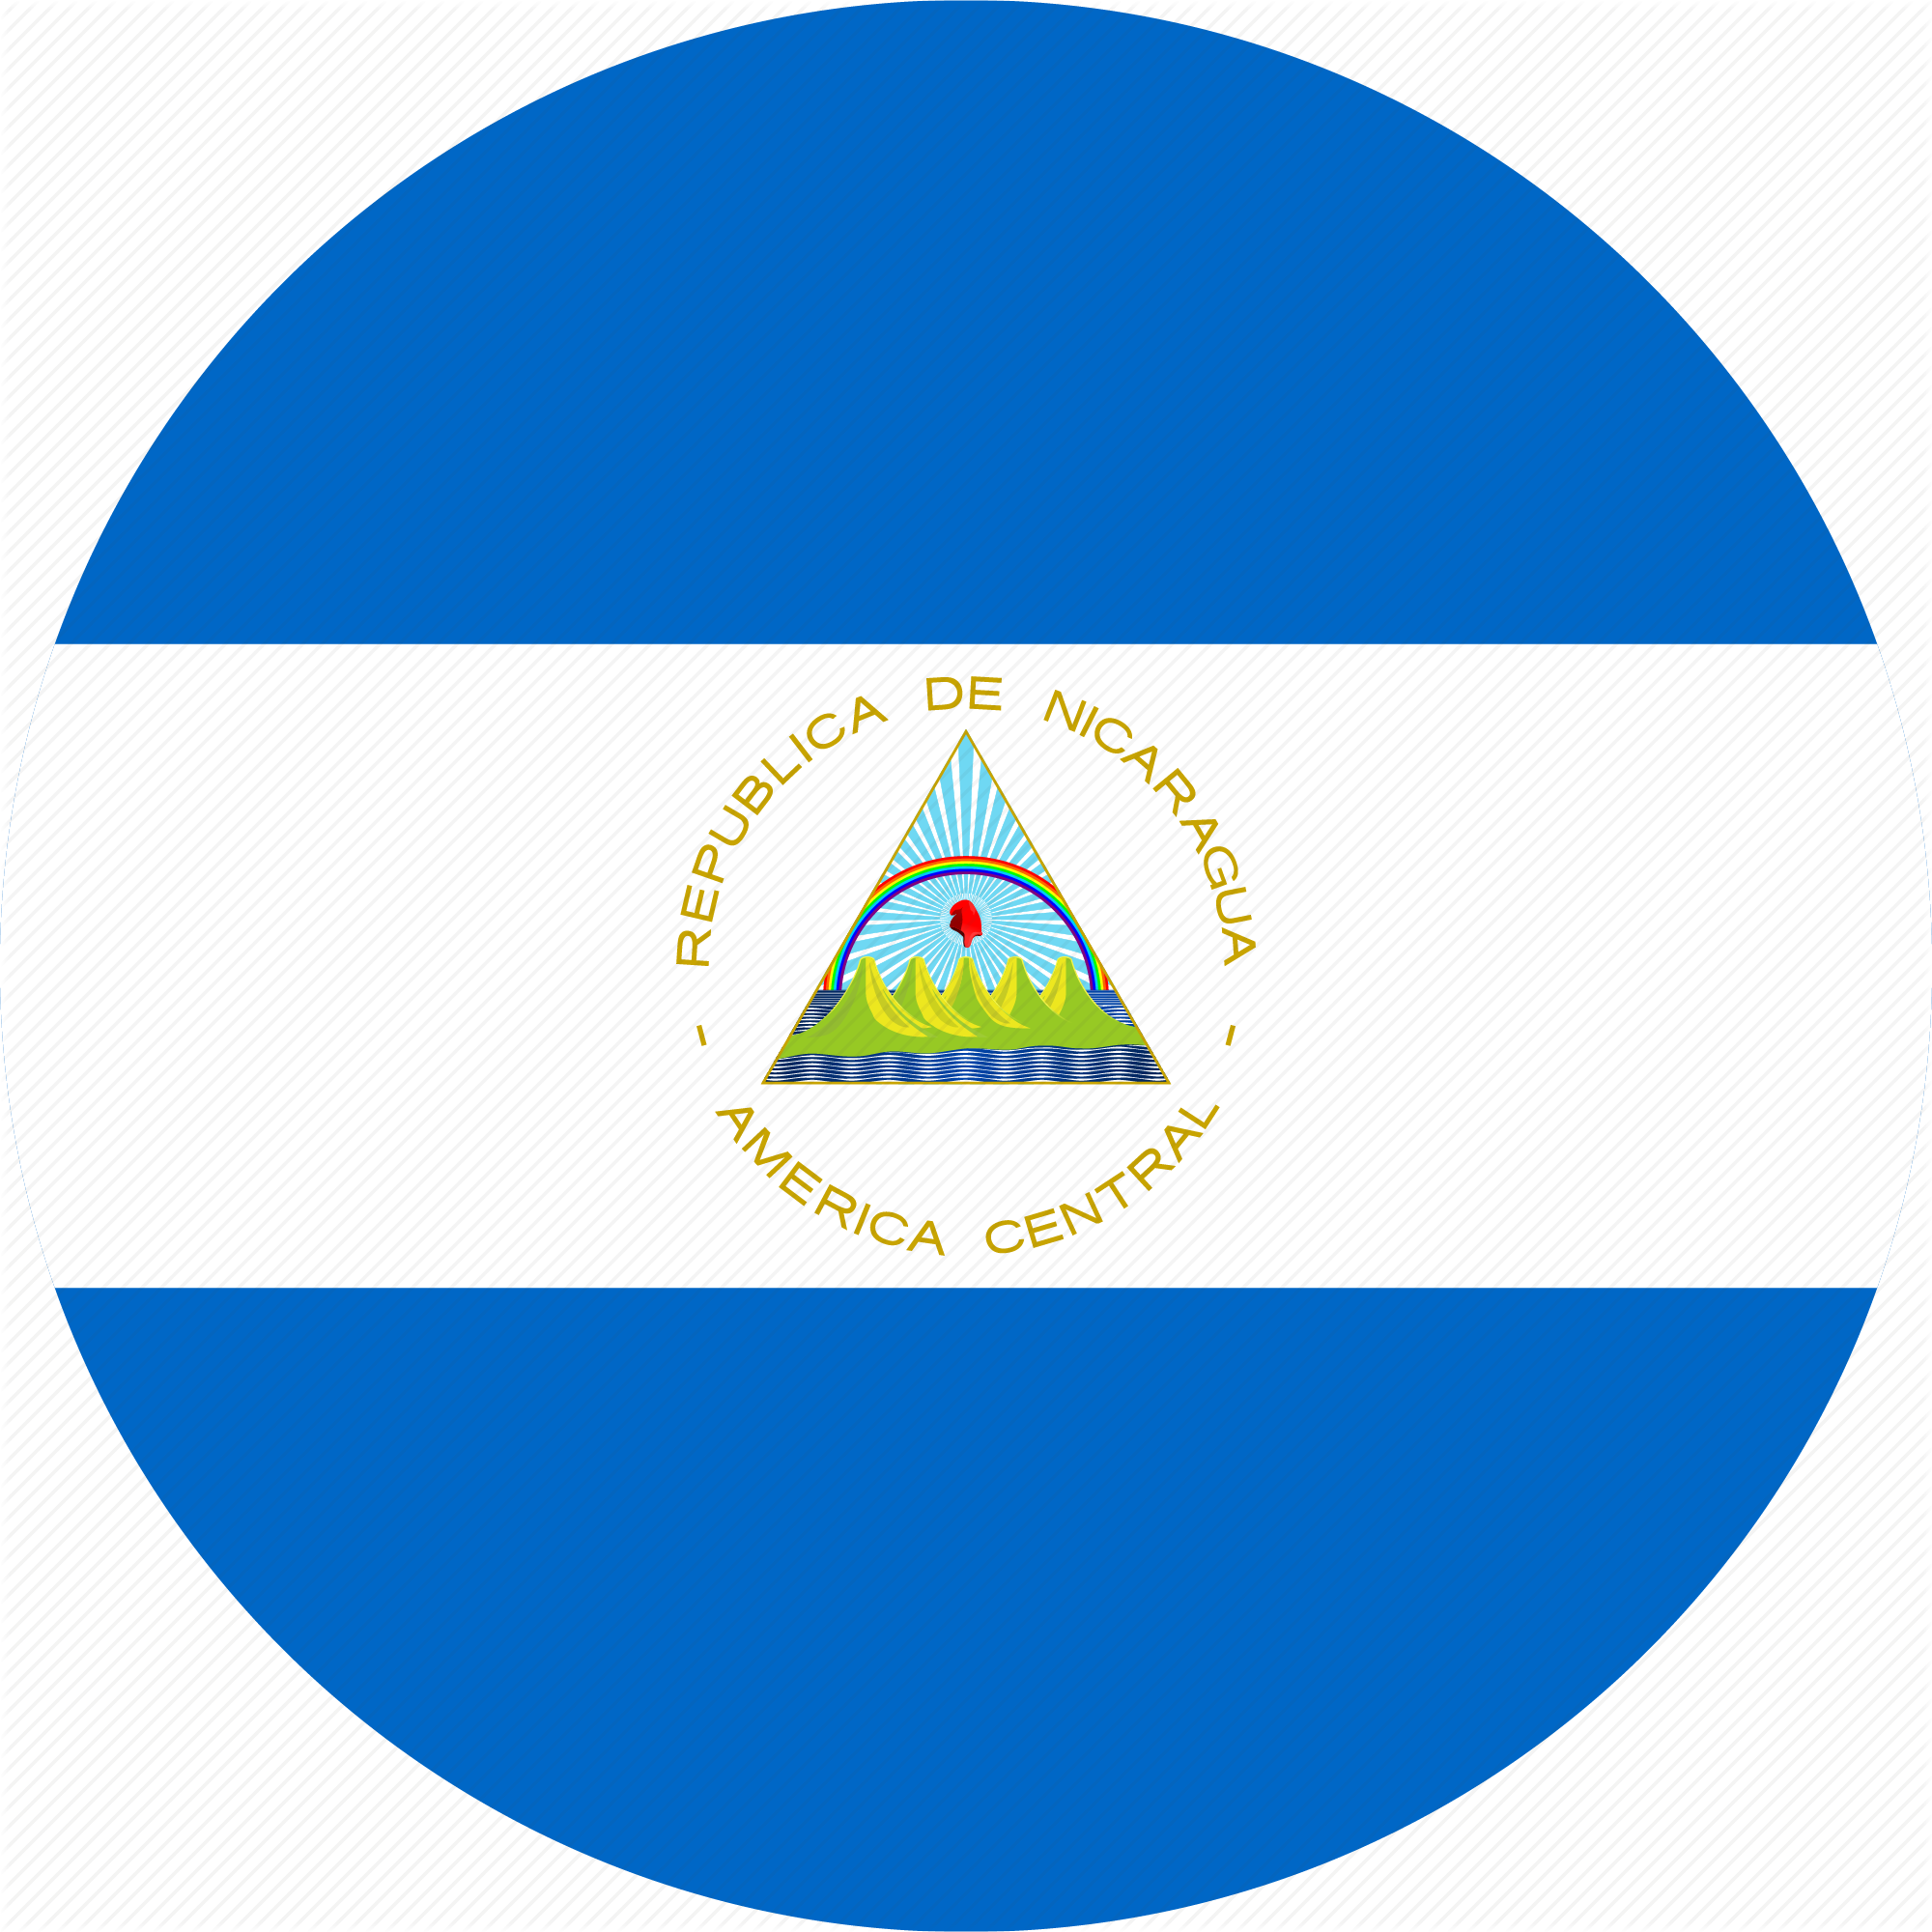 Guatemala vs Nicaragua: Don’t expect many goals